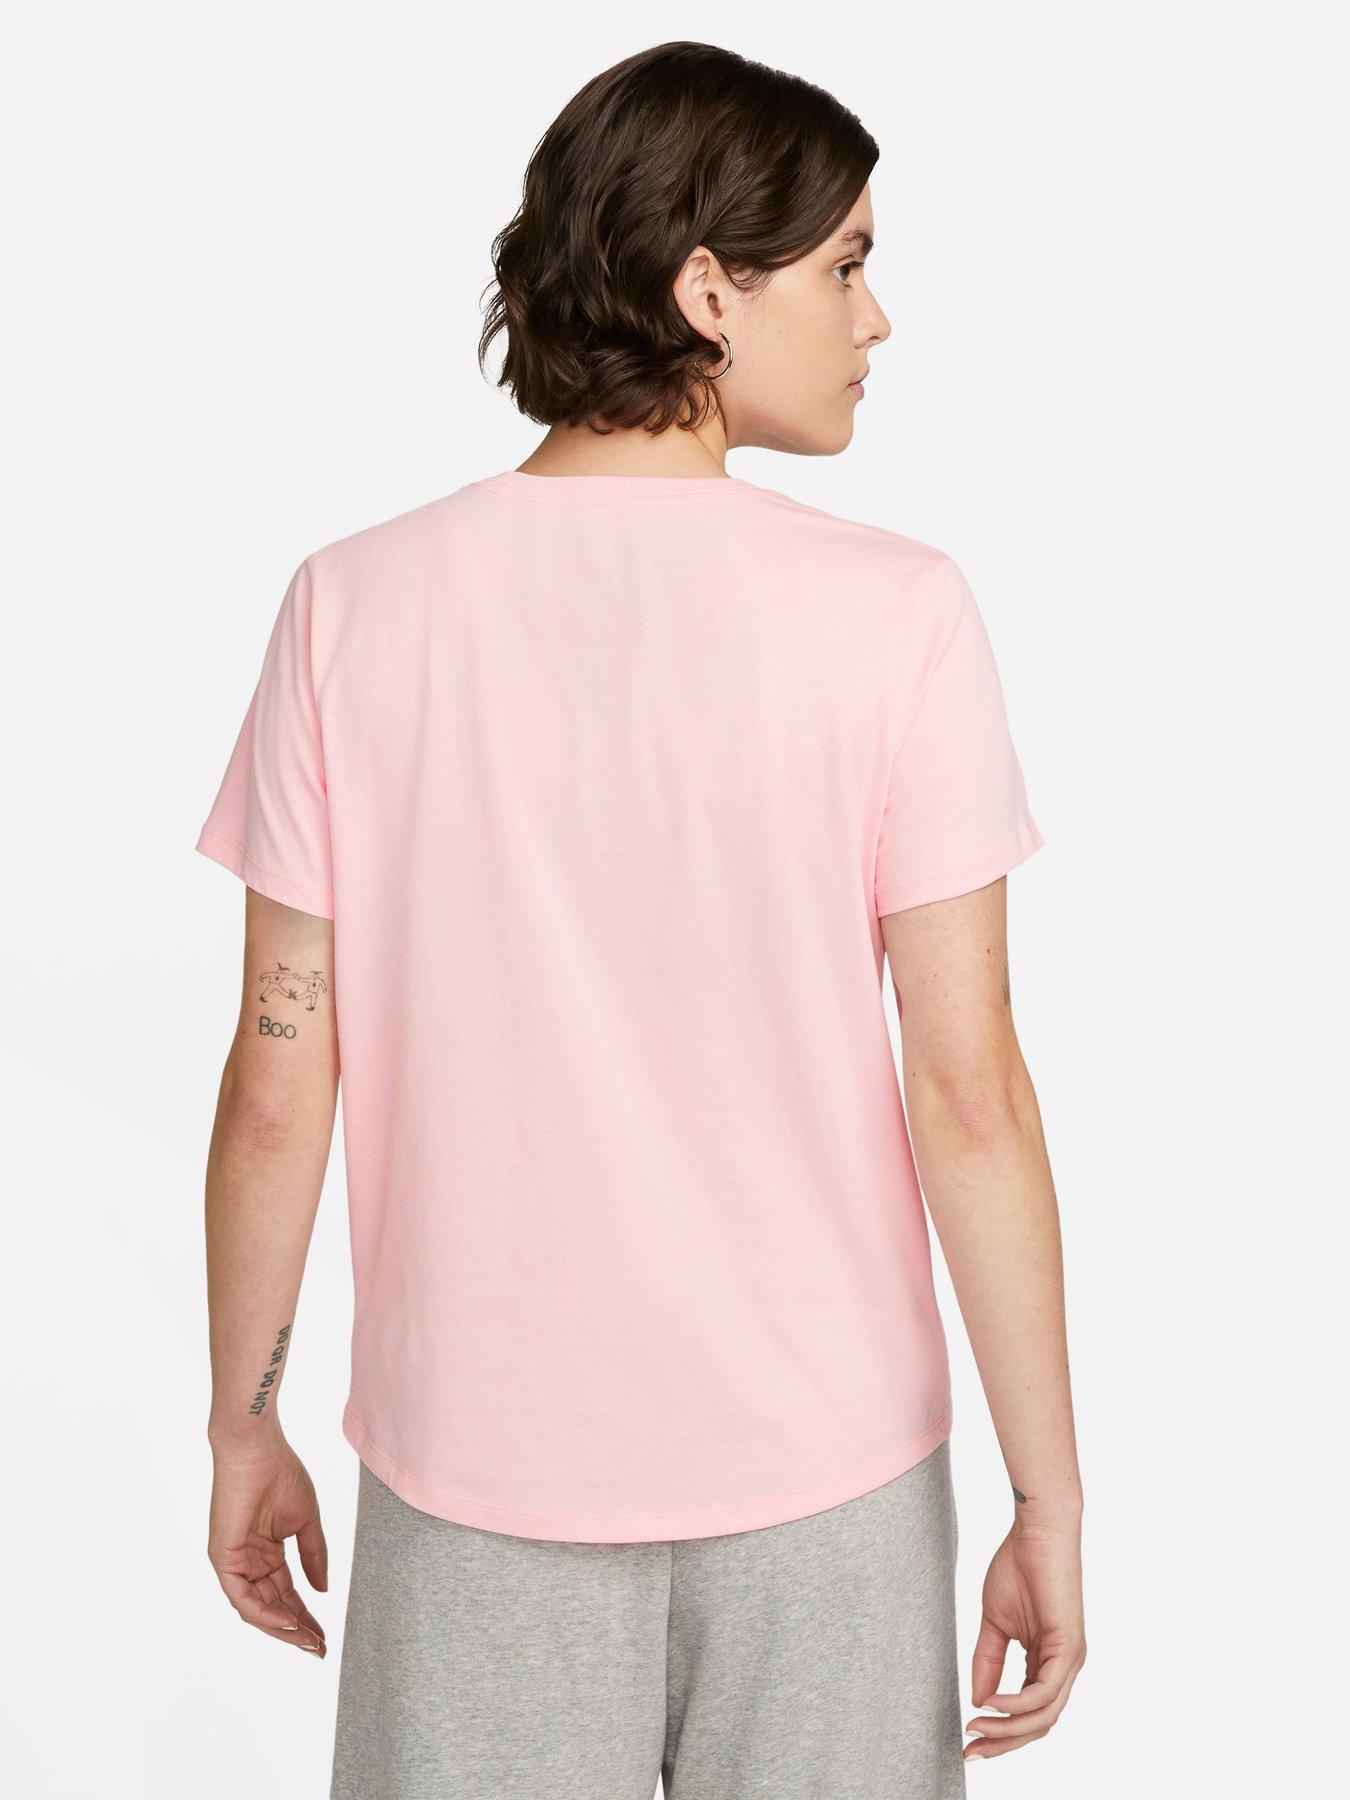 Nike Women Plus Size Sportswear Essential futura tee Shirt top 1x light  Pink